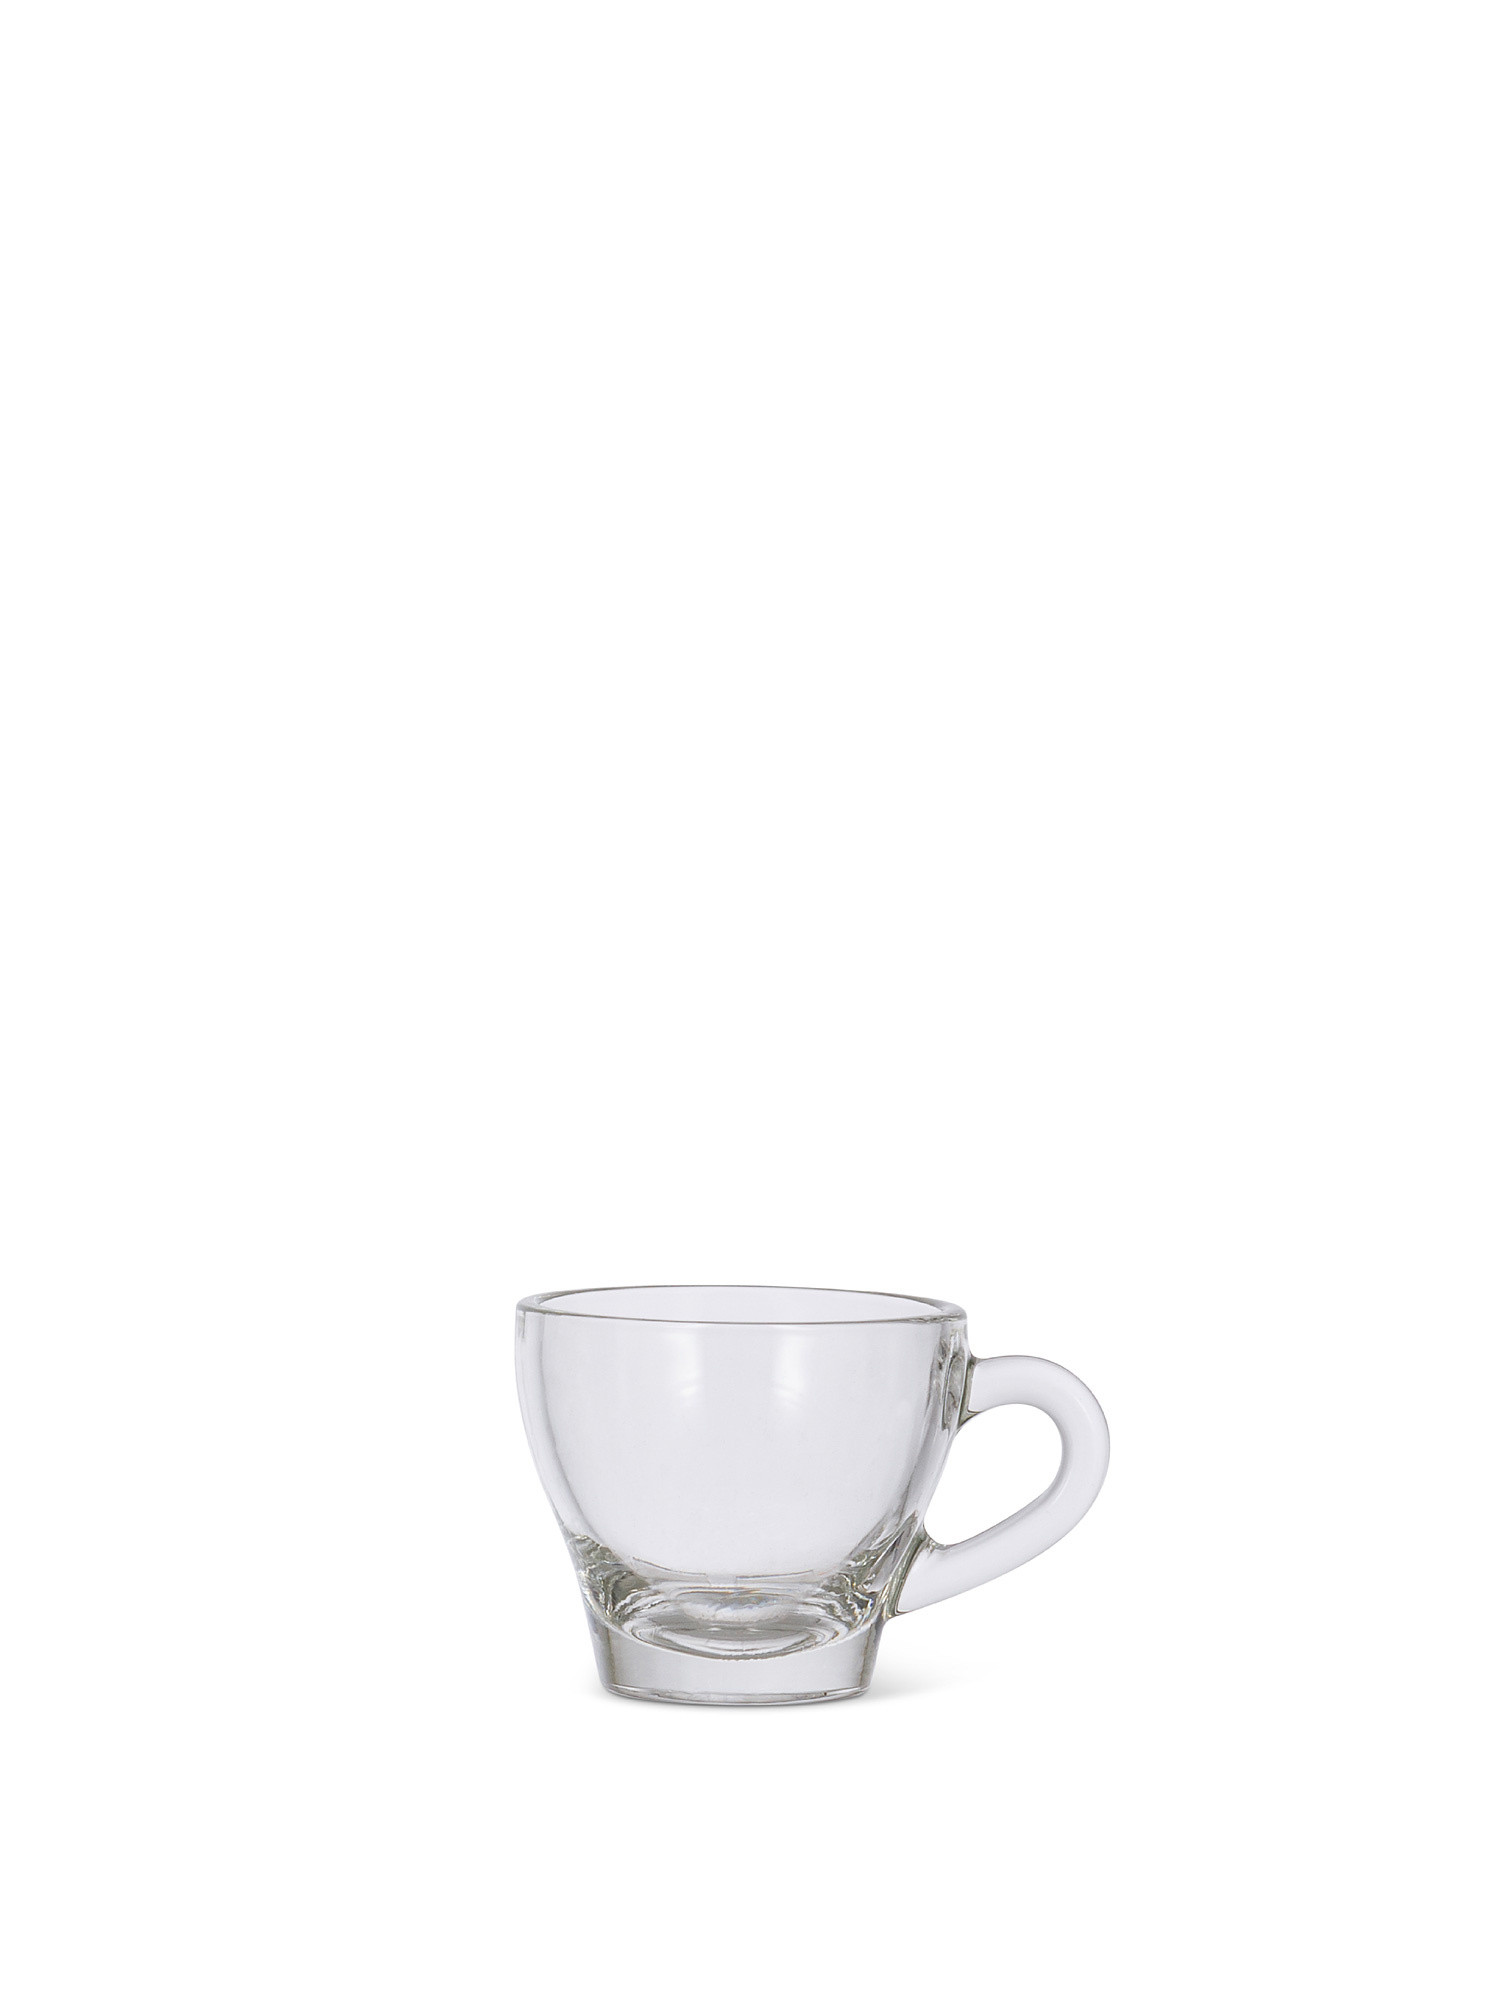 Tazza da caffè vetro, Trasparente, large image number 0